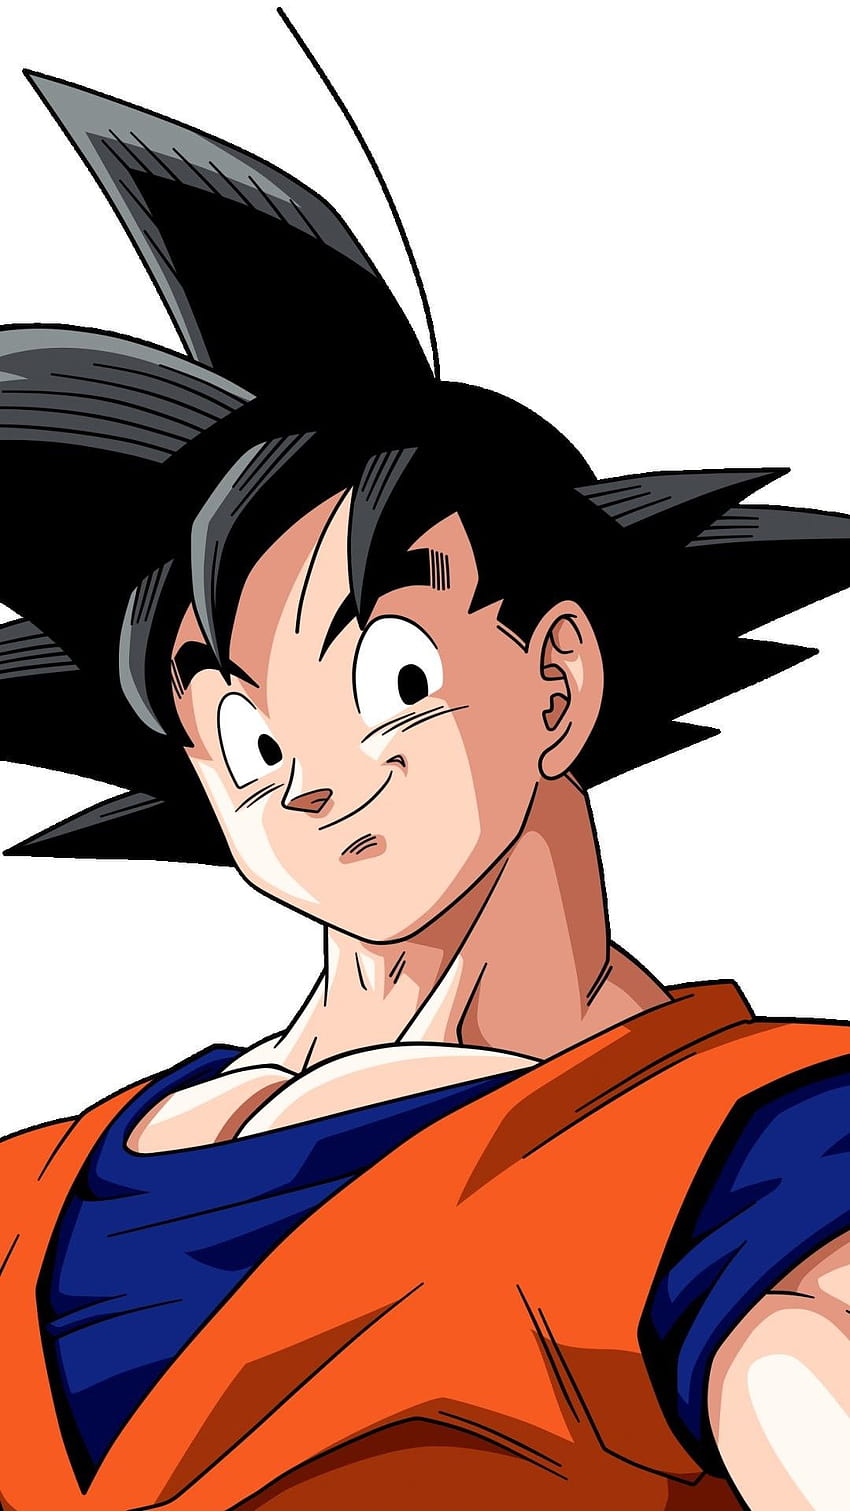 Goku - Anime Wallpaper Download | MobCup